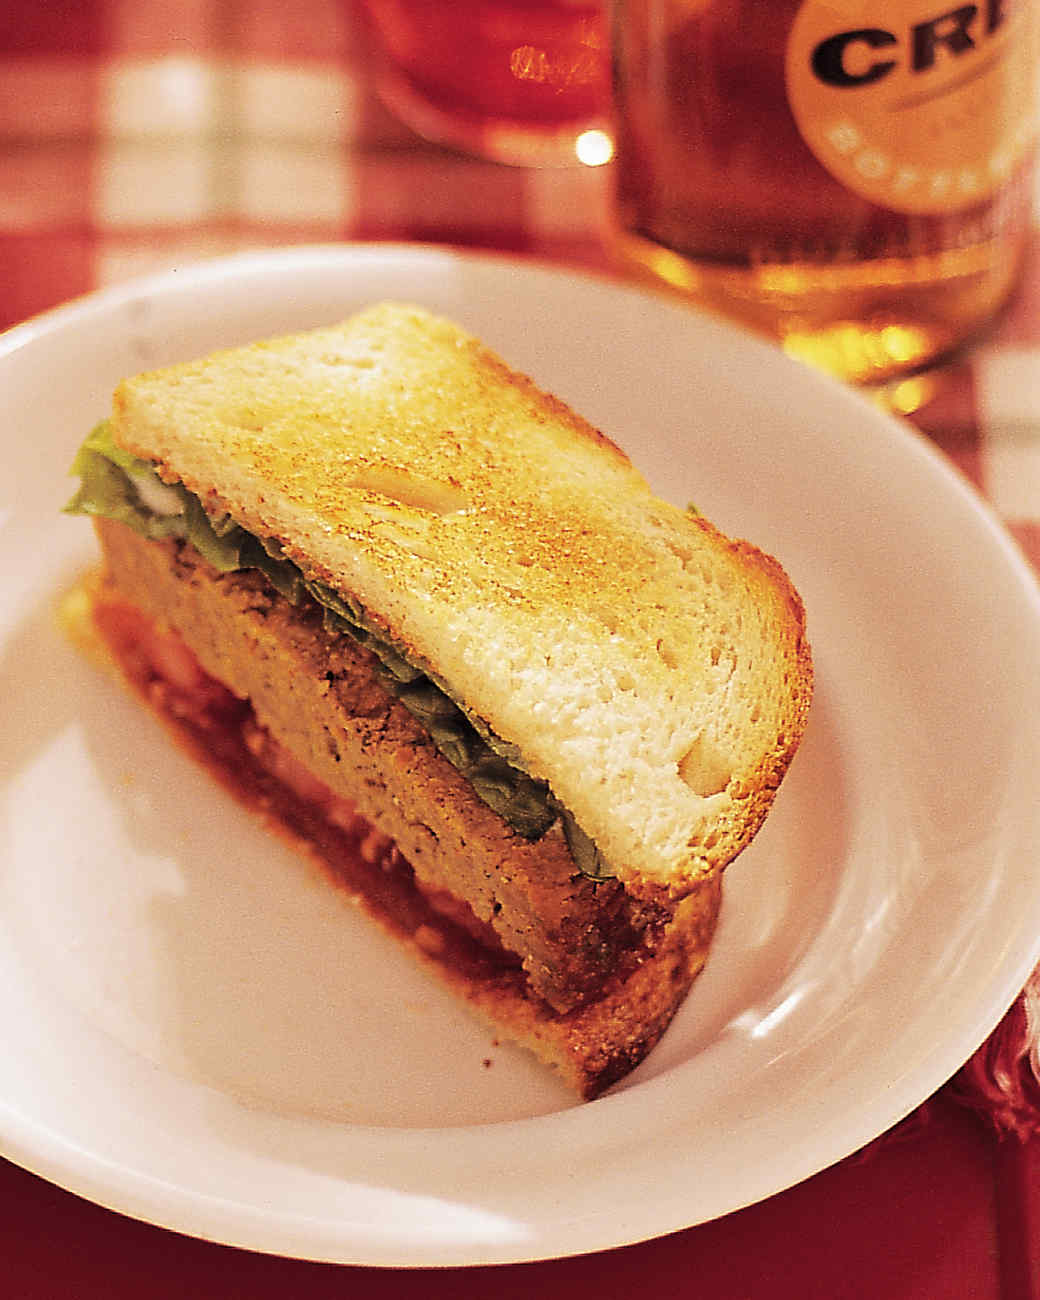 Picnic Sandwich Recipes Martha Stewart